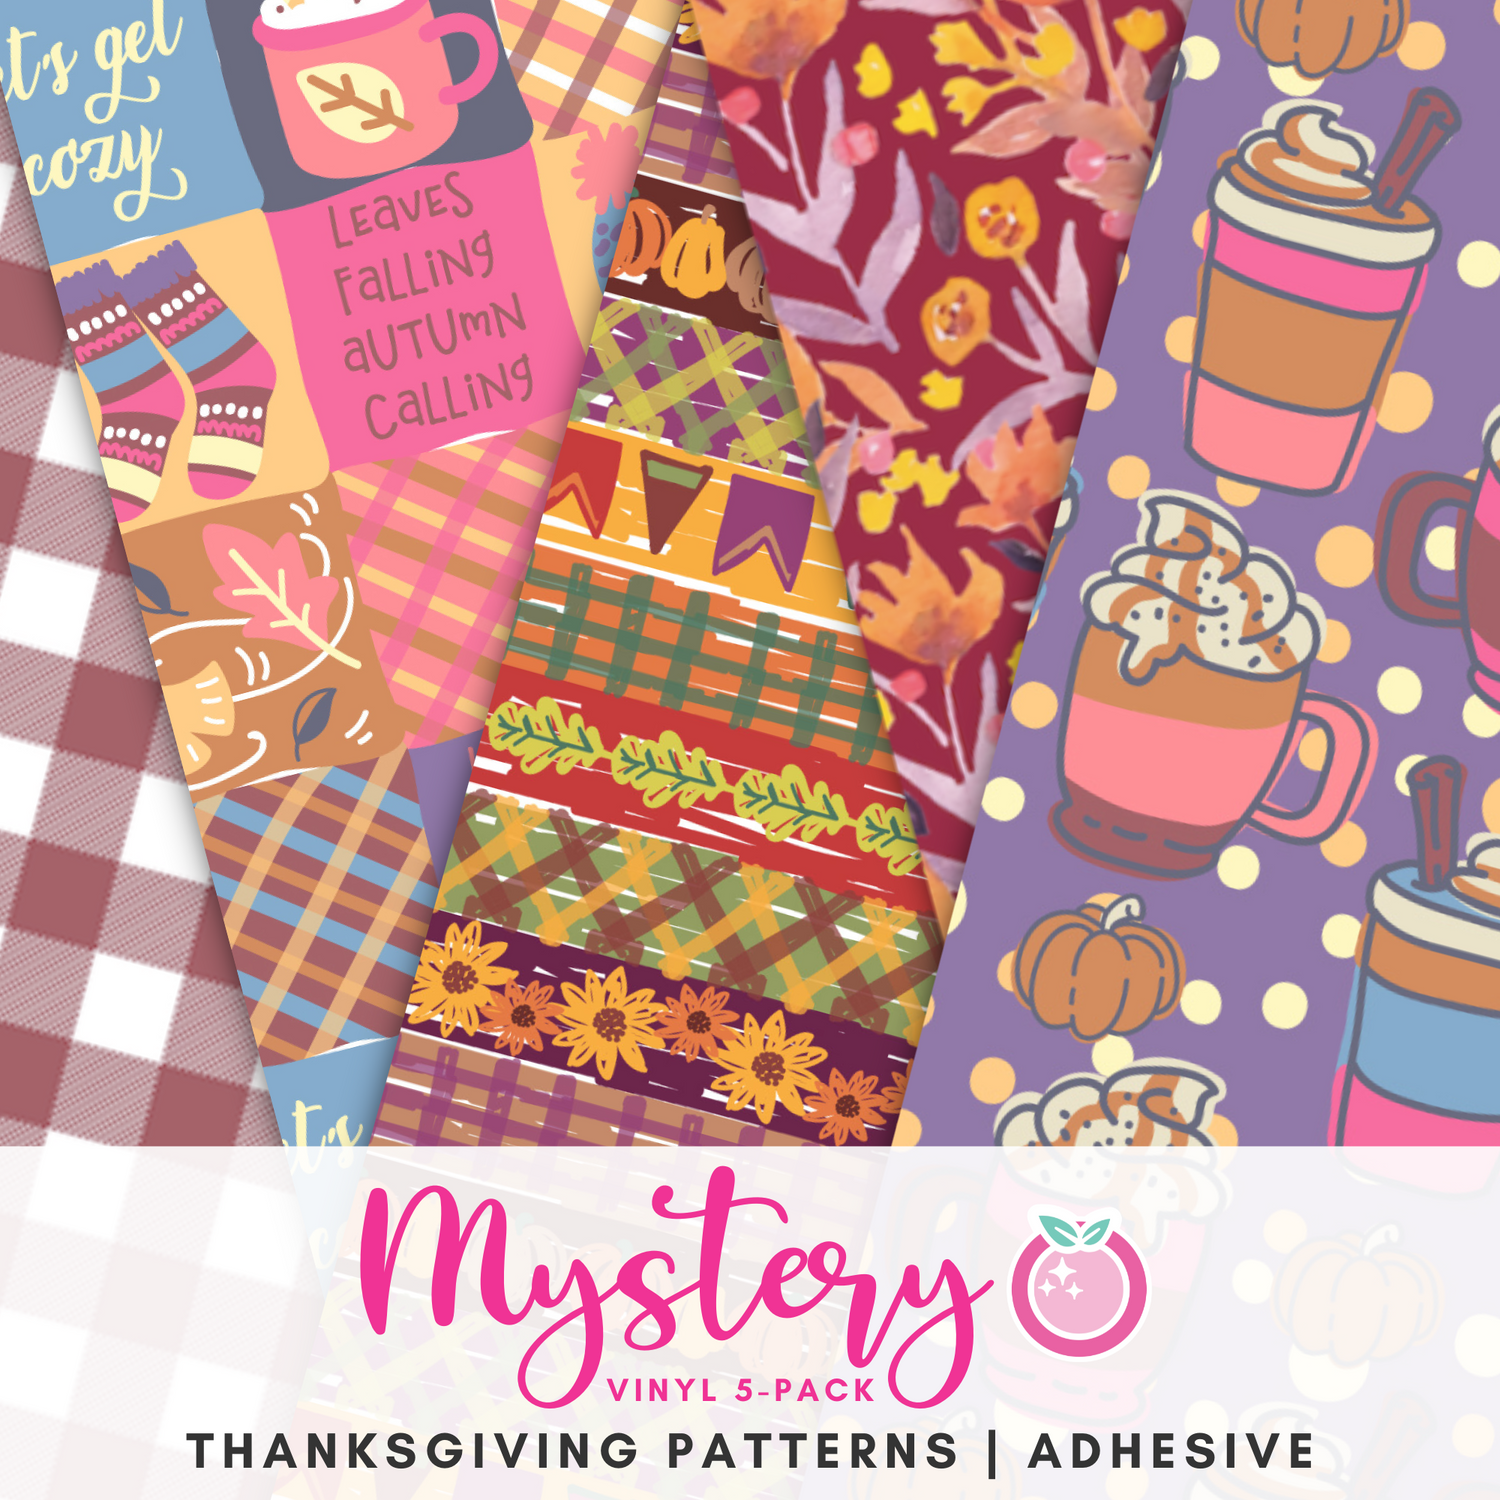 Mystery Vinyl 5-Packs - Thanksgiving Patterns - HTV or Adhesive